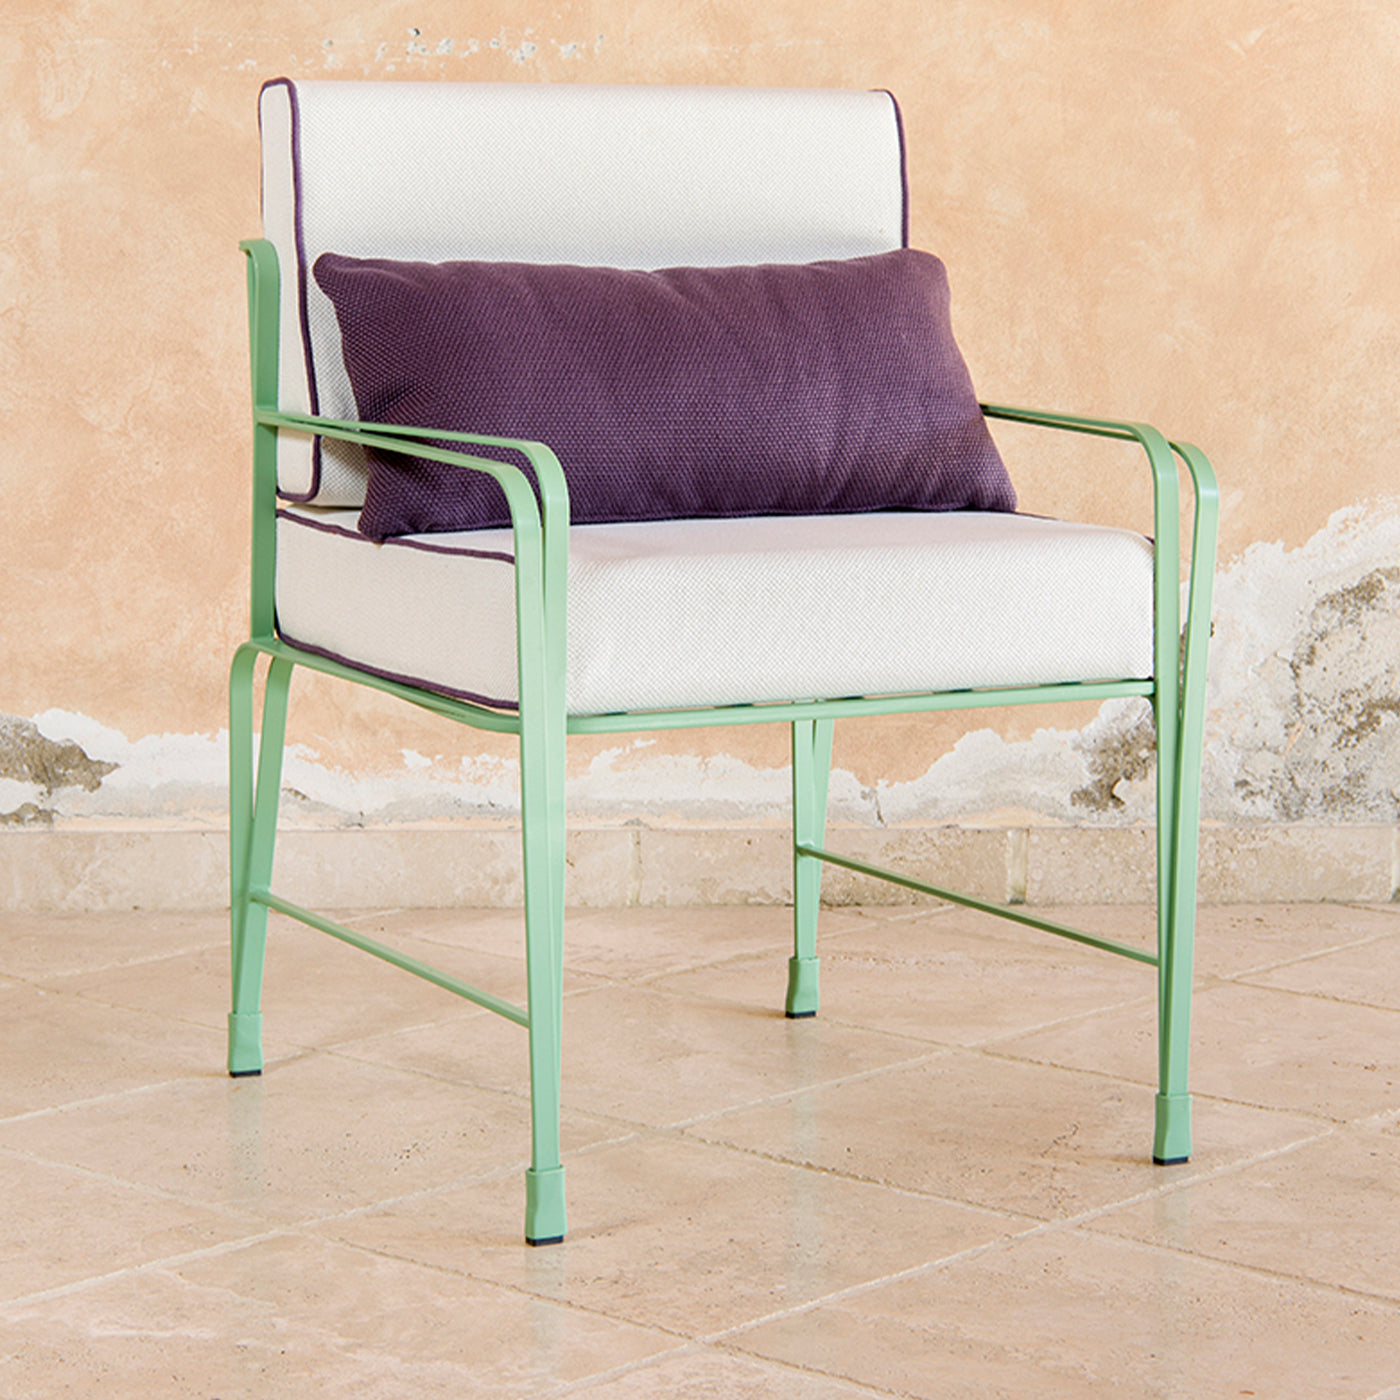 Marina Black Chair by Ciarmoli Queda Studio - Alternative view 3